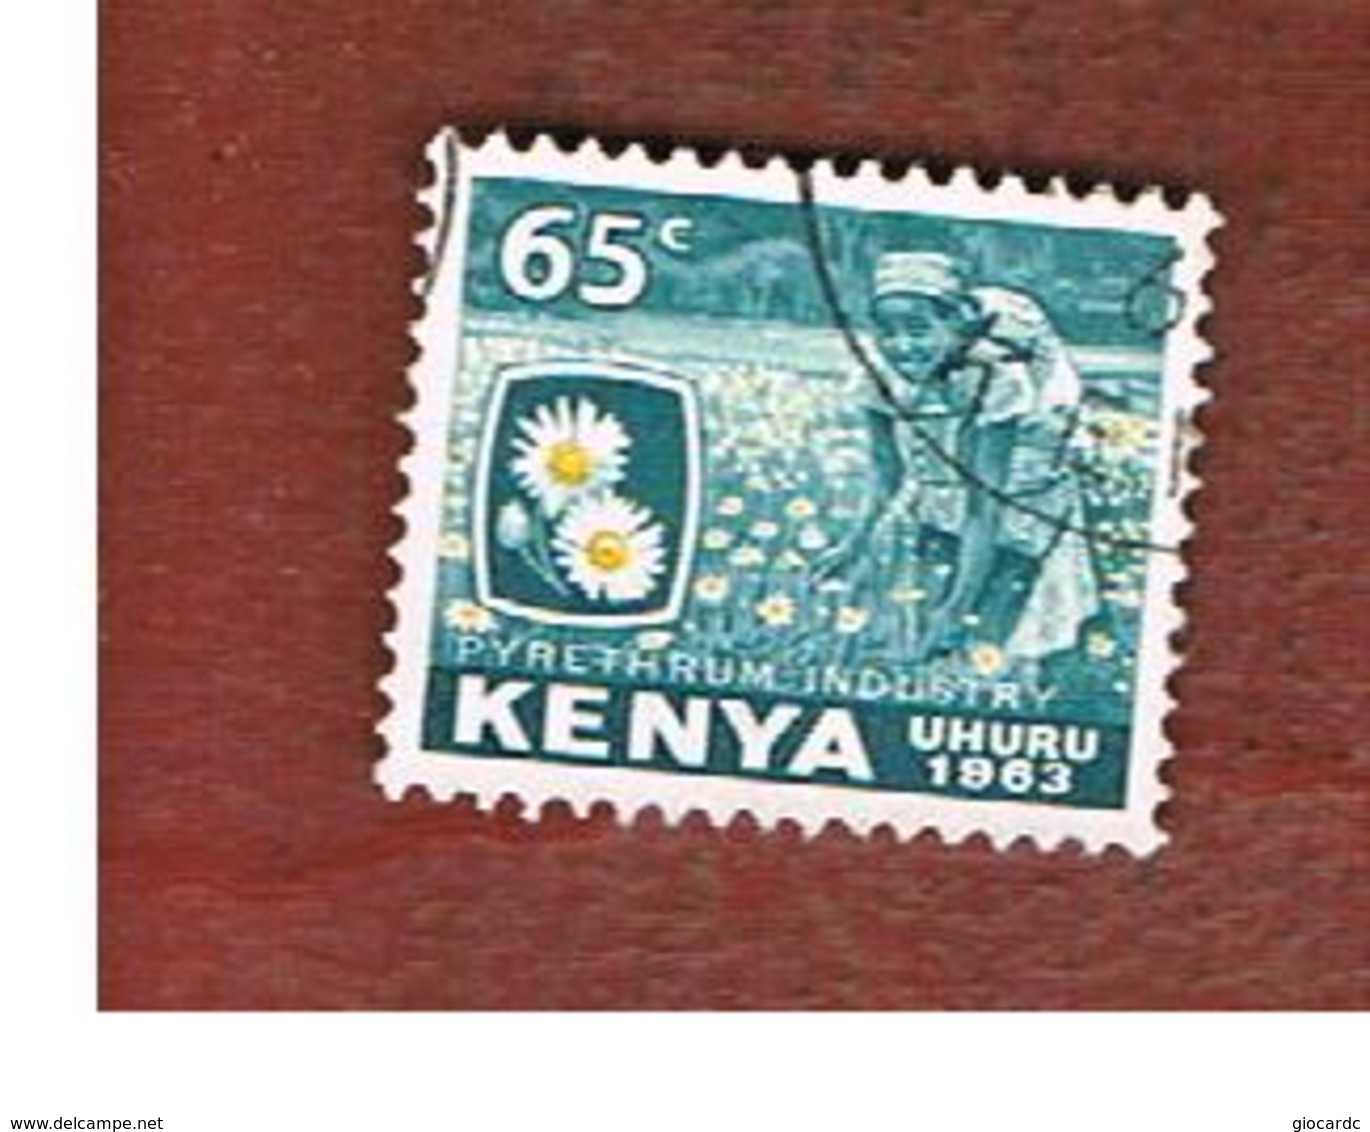 KENYA  - SG 8 -  1963   PYRETHRUM INDUSTRY    USED° - Kenia (1963-...)